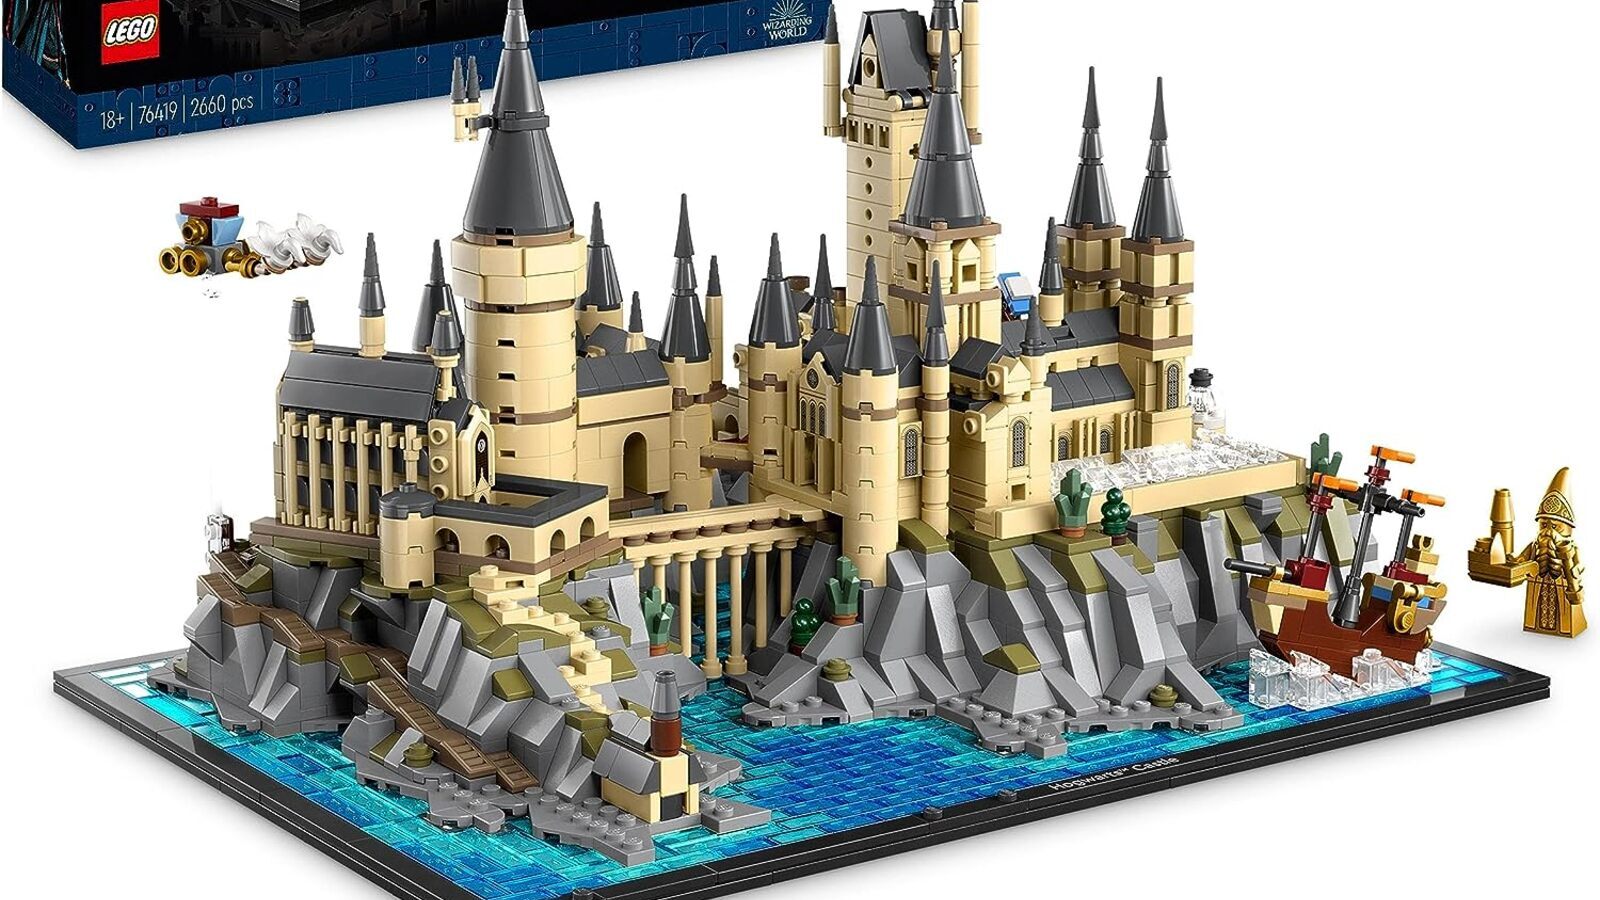 Immagine da Amazon del set LEGO Harry Potter di Hogwarts